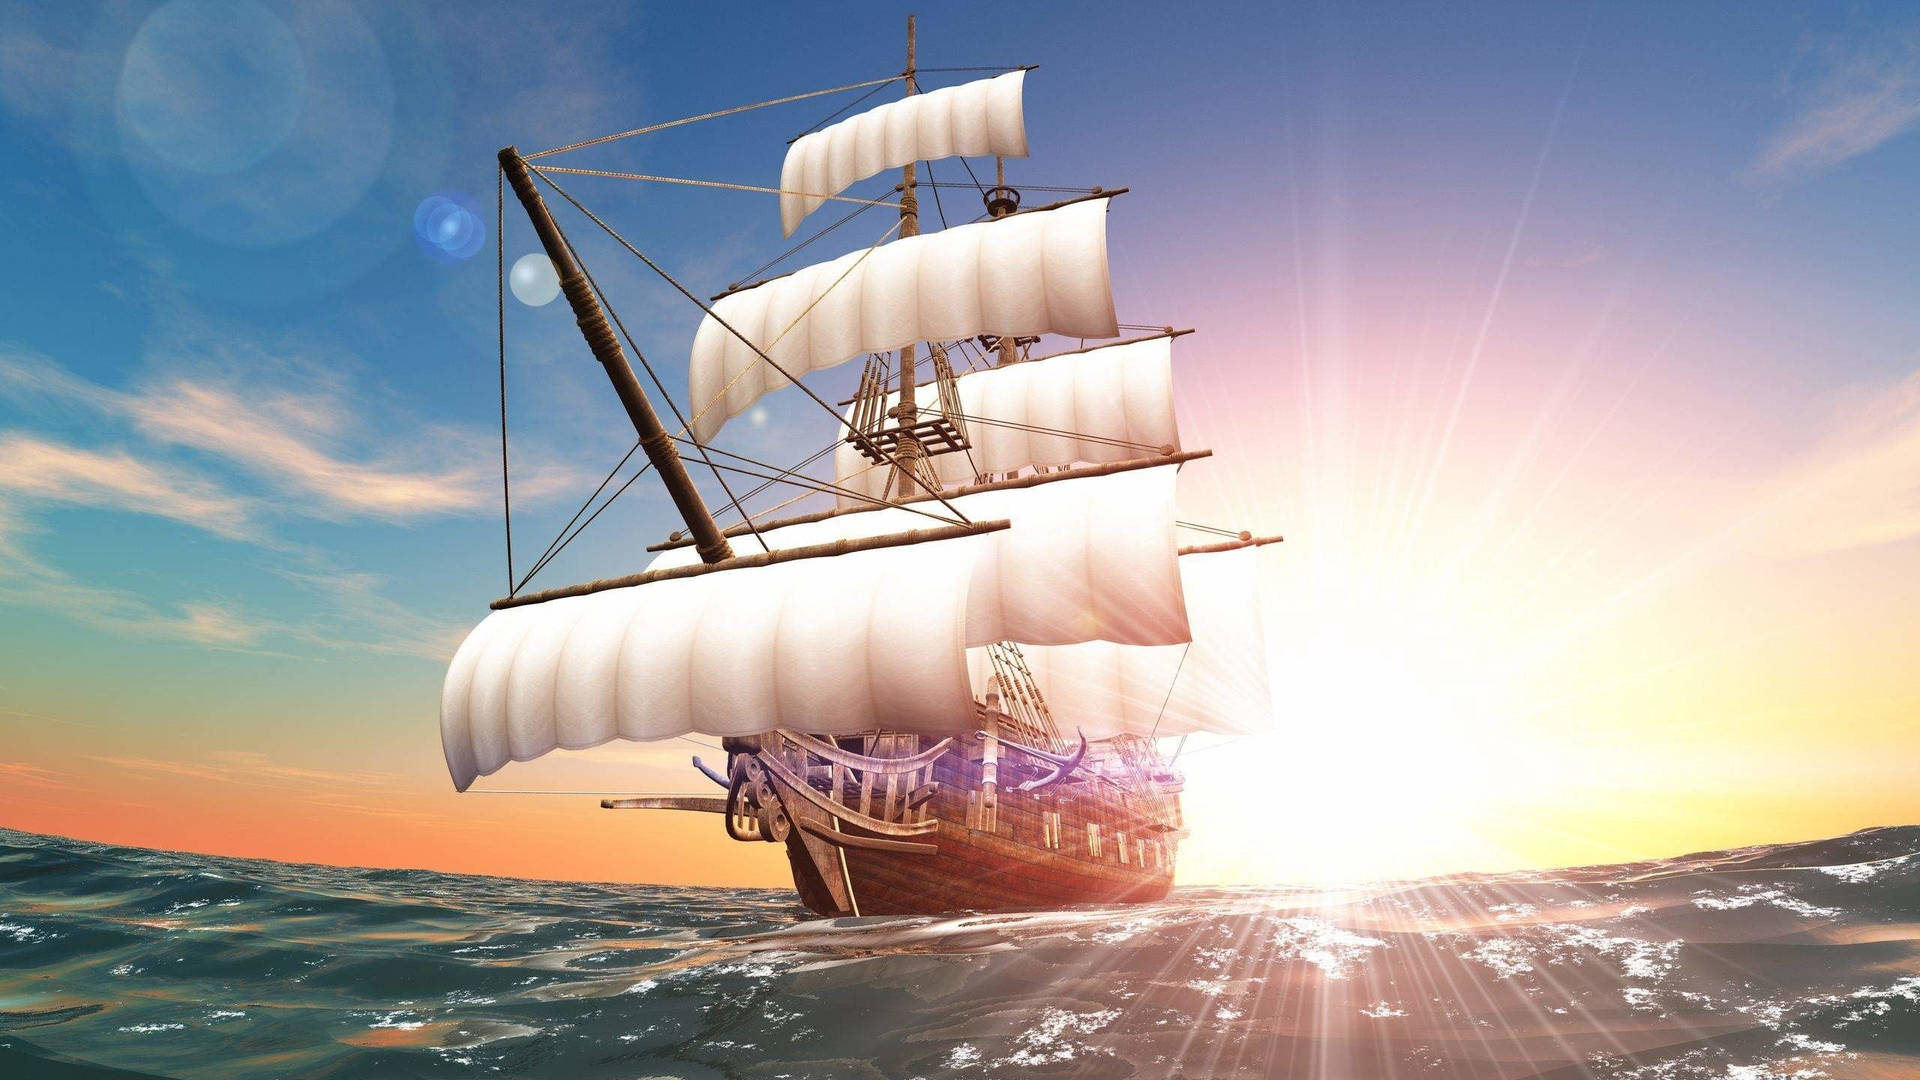 Sailing Ship Digital Art Background